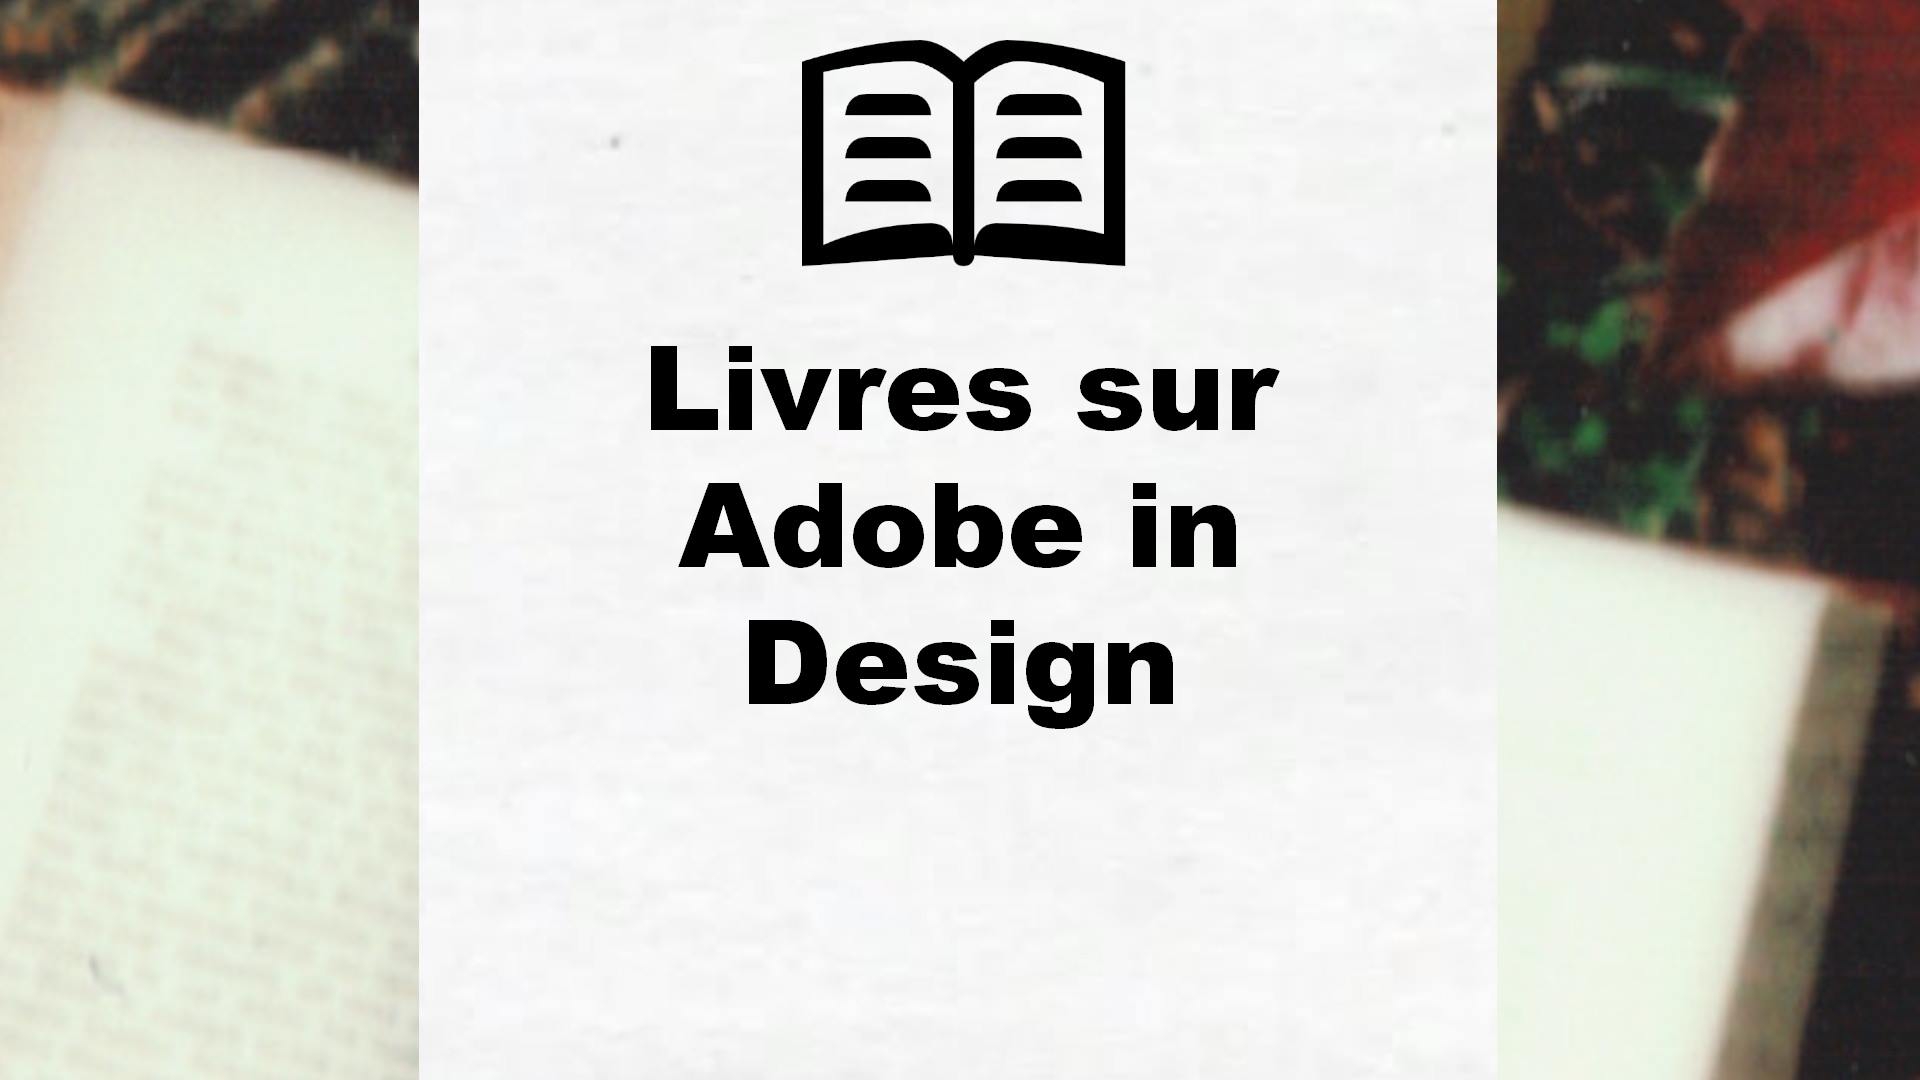 Livres sur Adobe in Design